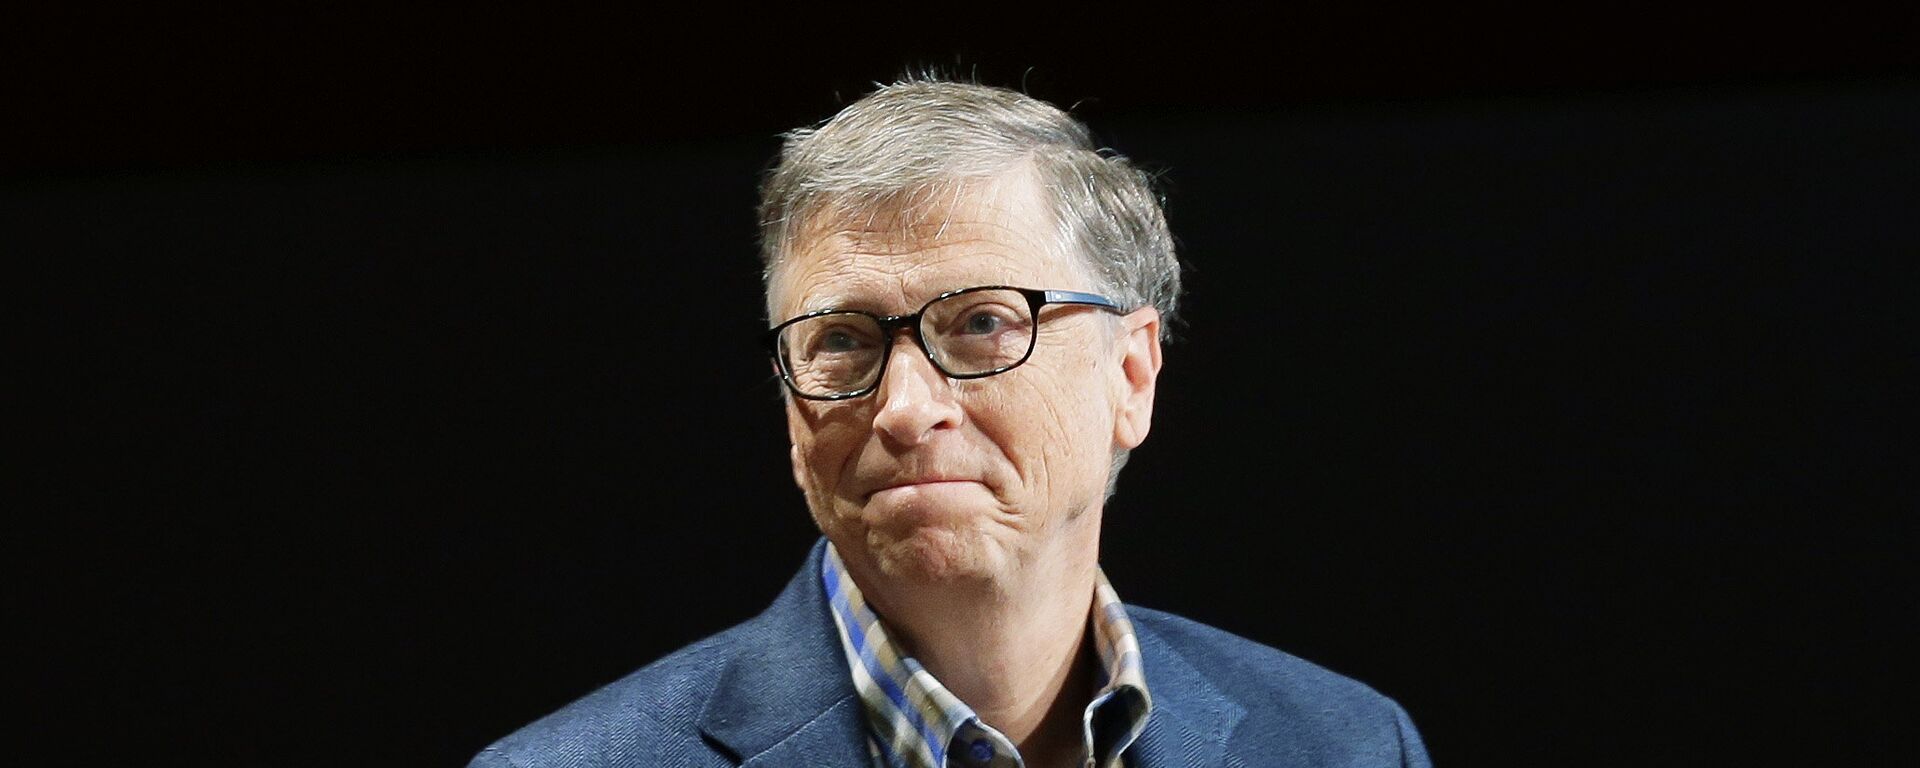 Bill Gates, cofundador de Microsoft  - Sputnik Mundo, 1920, 07.08.2020